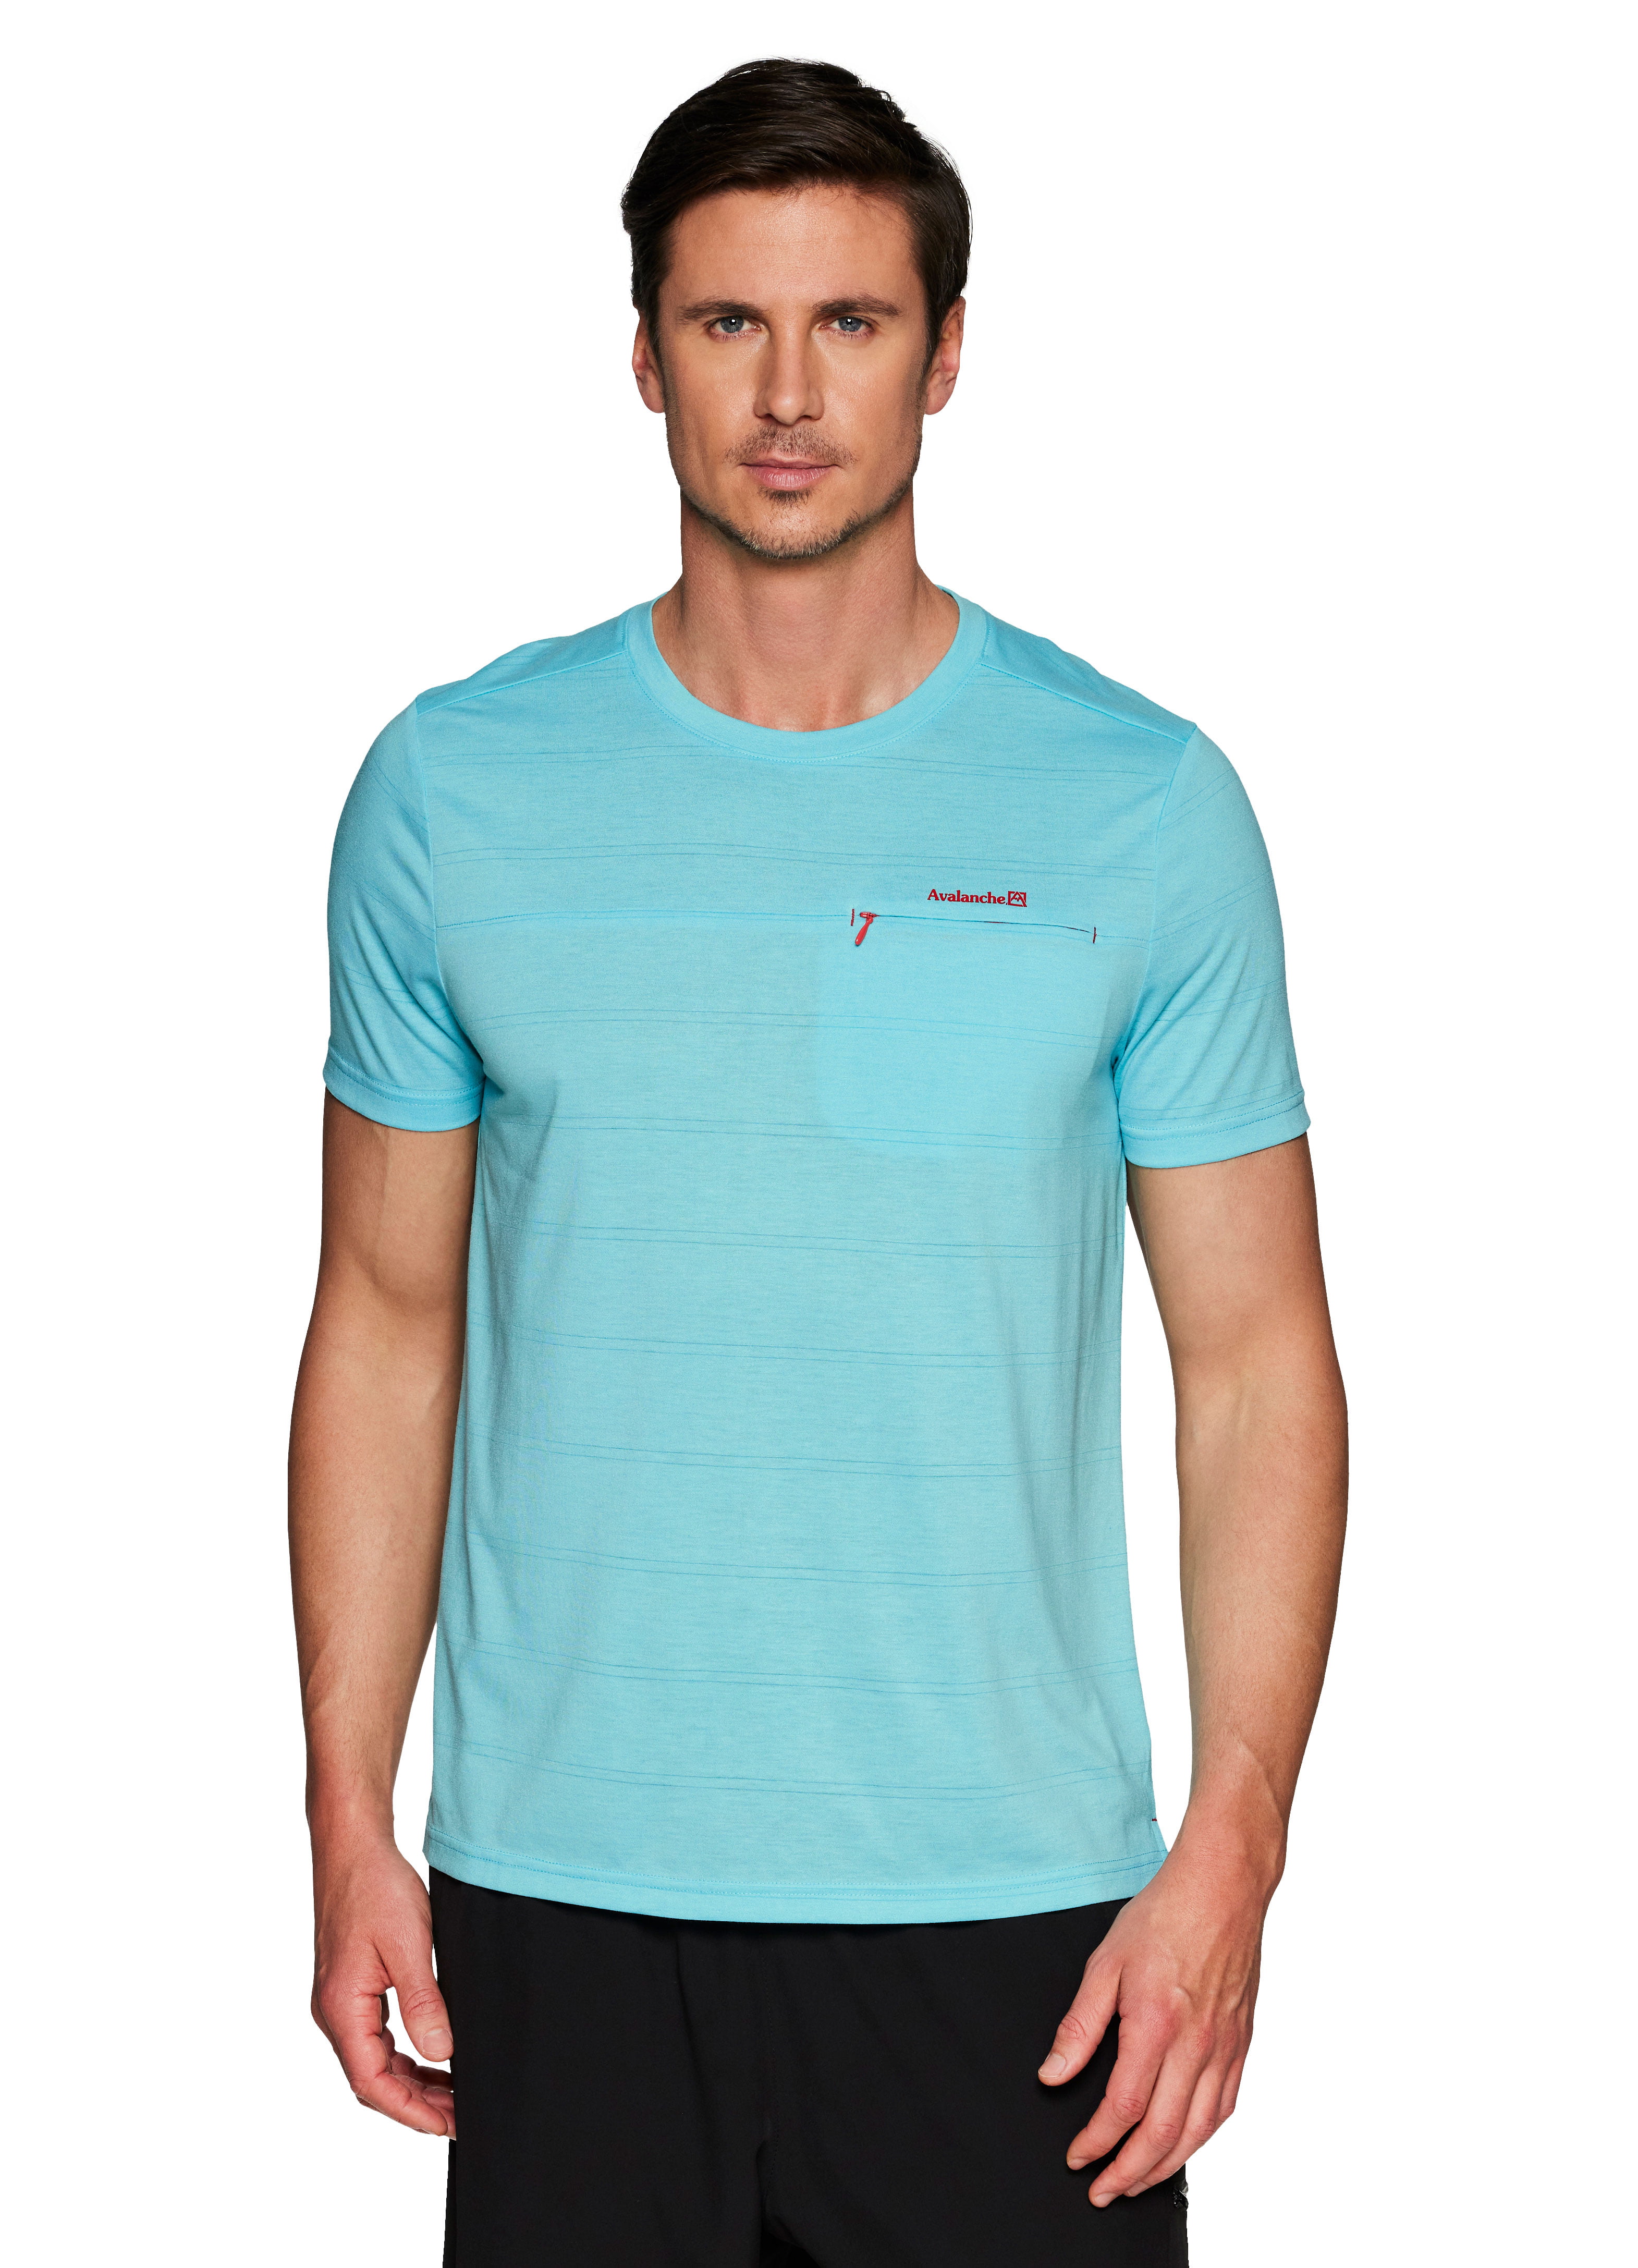 Avalanche Men's (NWT) M Gray Cotton T-Shirt Short Sleeve: Outdoors Gear